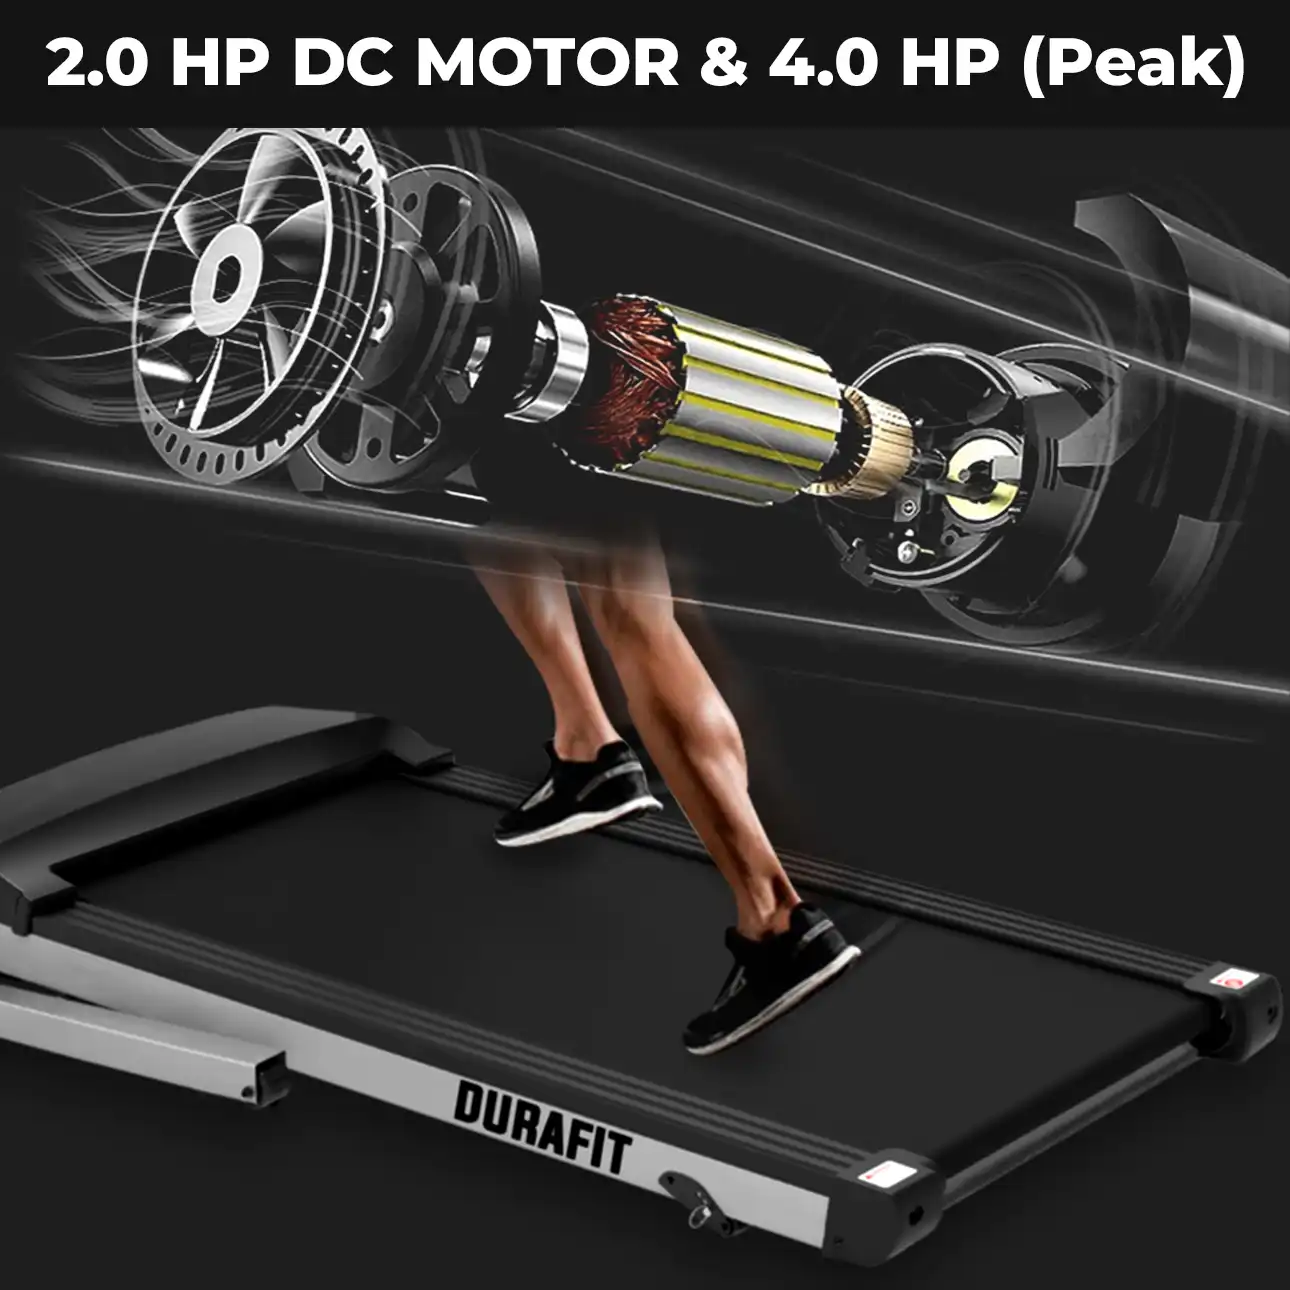 Durafit Strong treadmill 4HP DC Motor